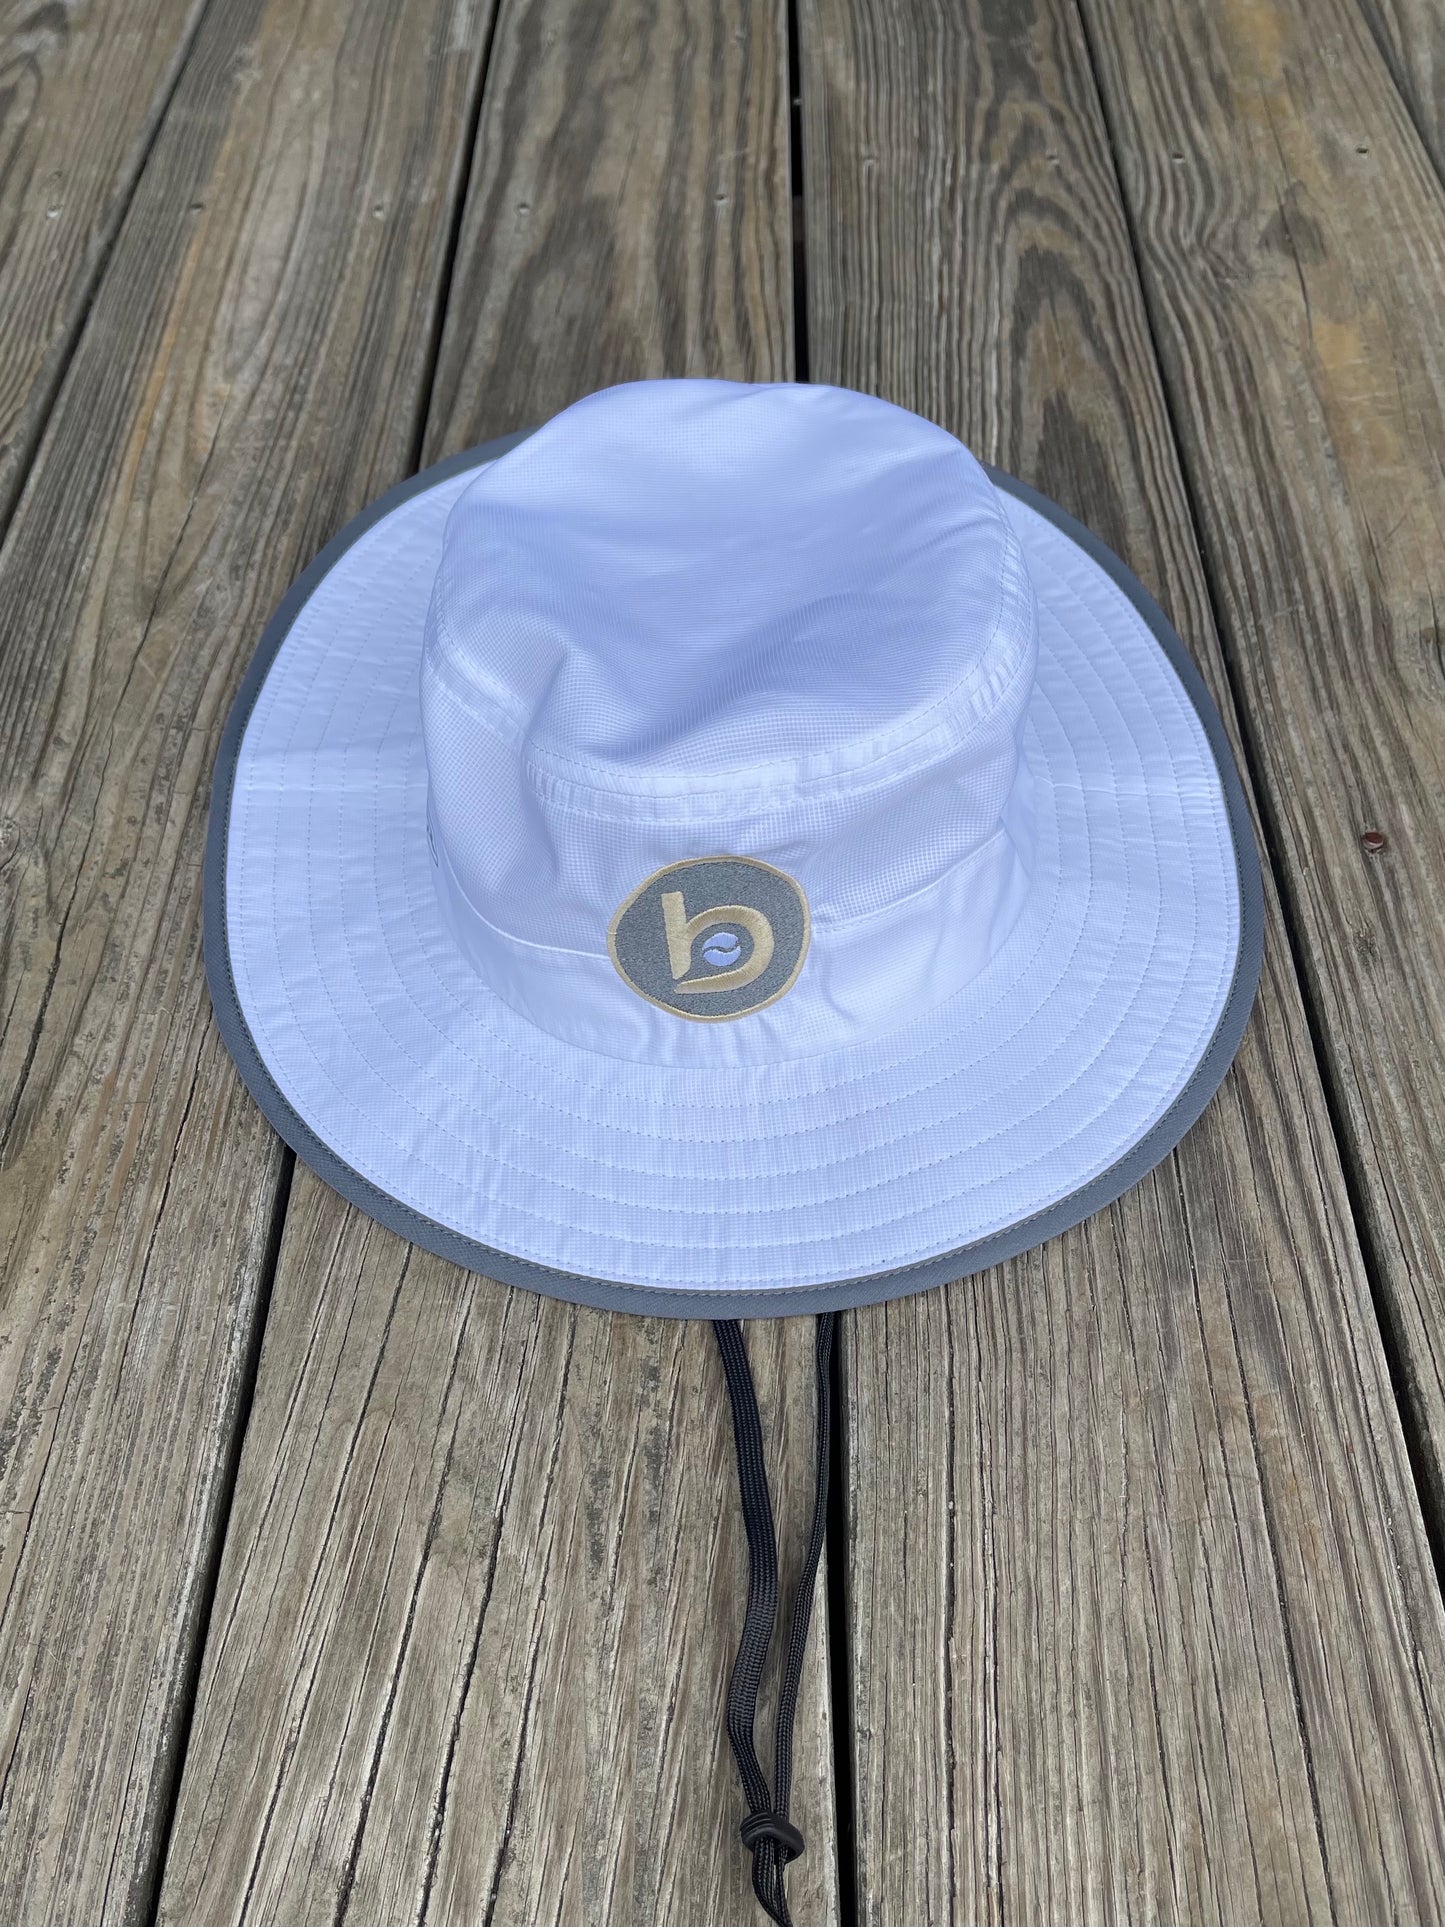 Bradley Baseball Bucket/Boonie hat (circle b logo)